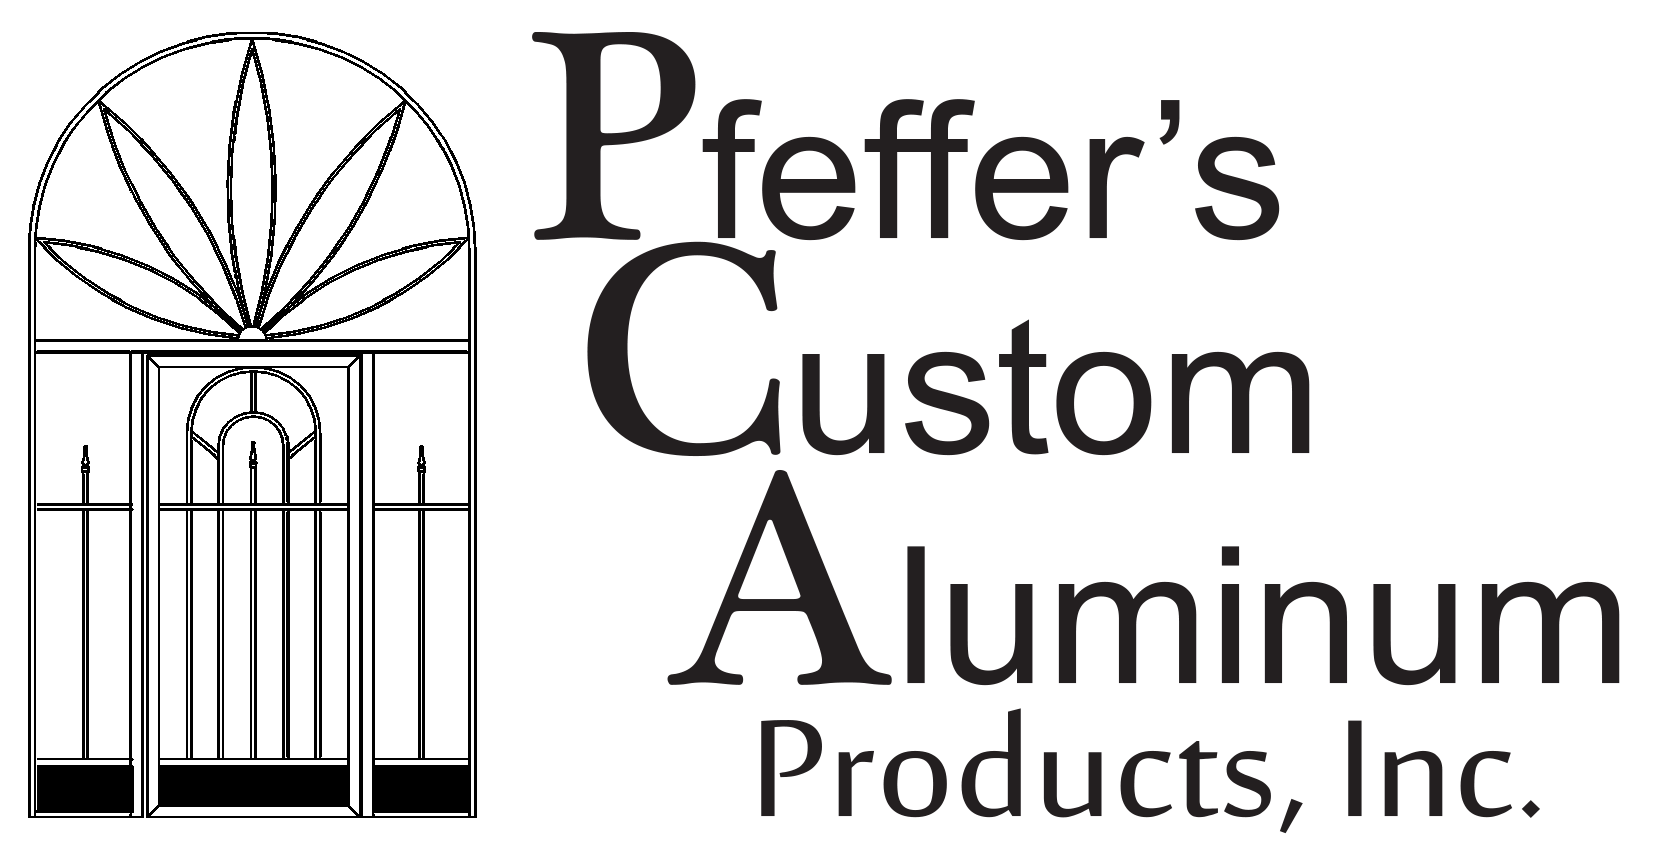 Pfeffer-logo.png?mtime=20200211104429#asset:17951